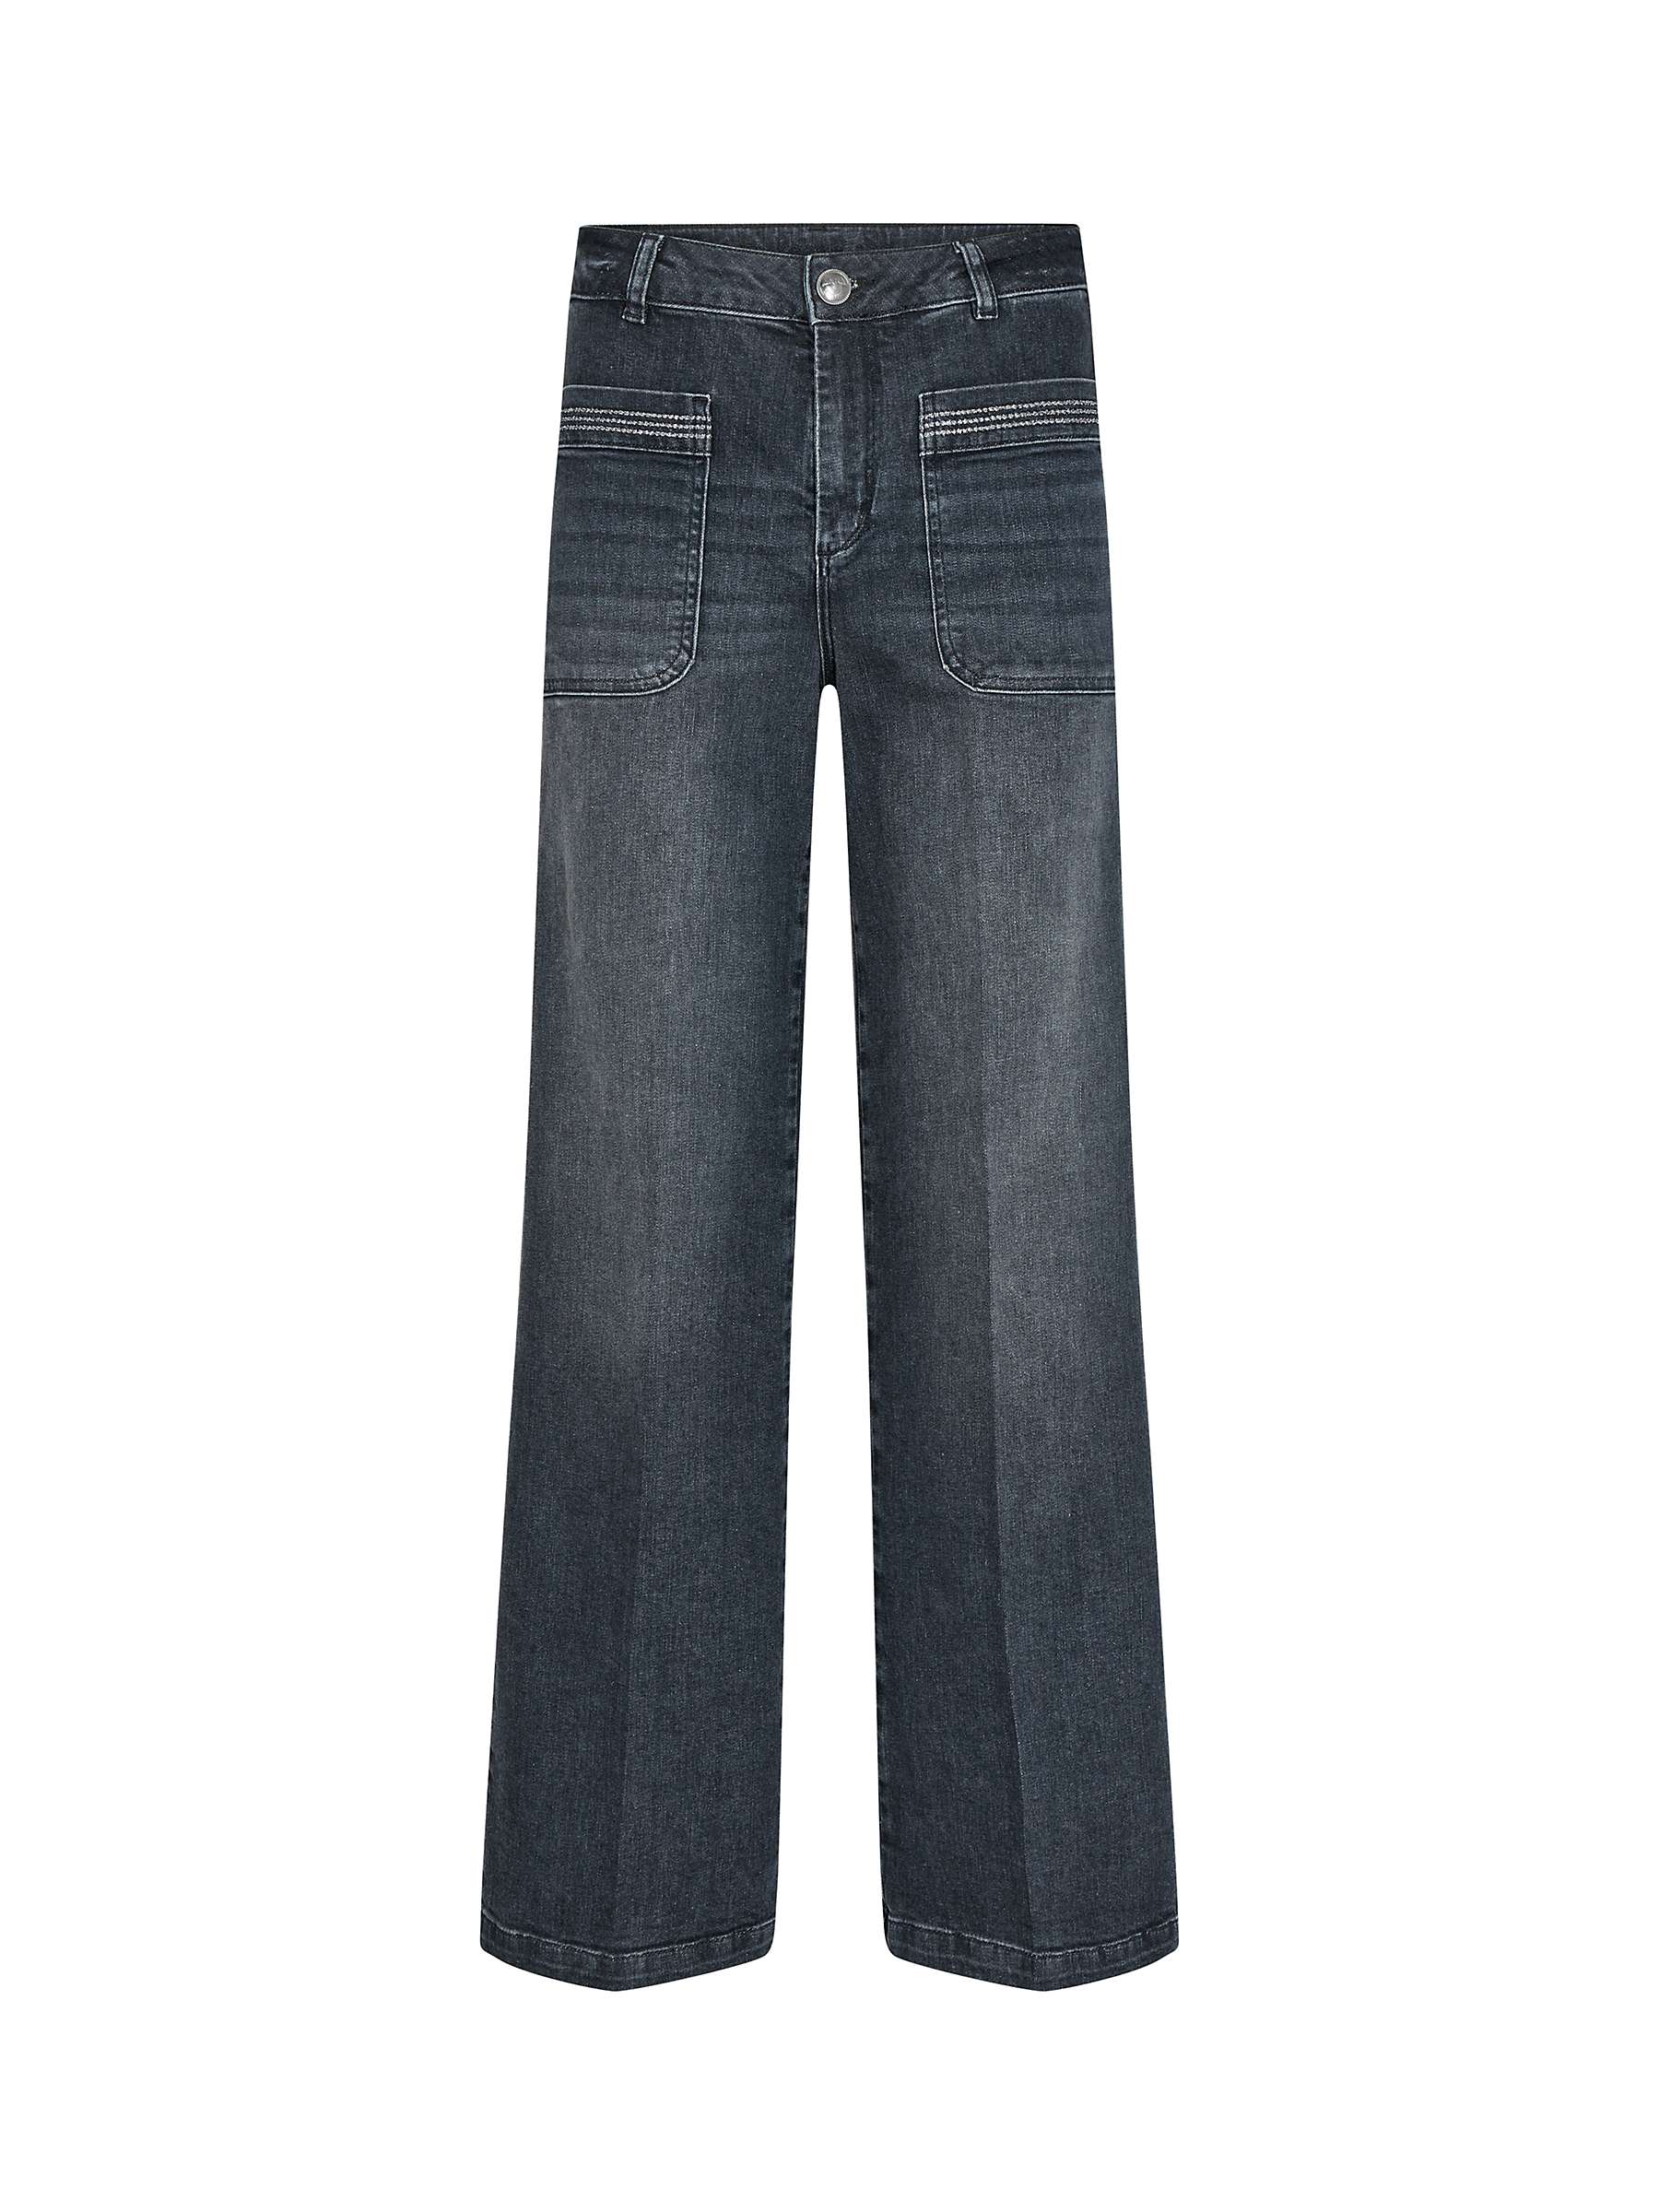 Buy MOS MOSH Colette Regent High Waisted Flared Jeans, Dark Grey Online at johnlewis.com